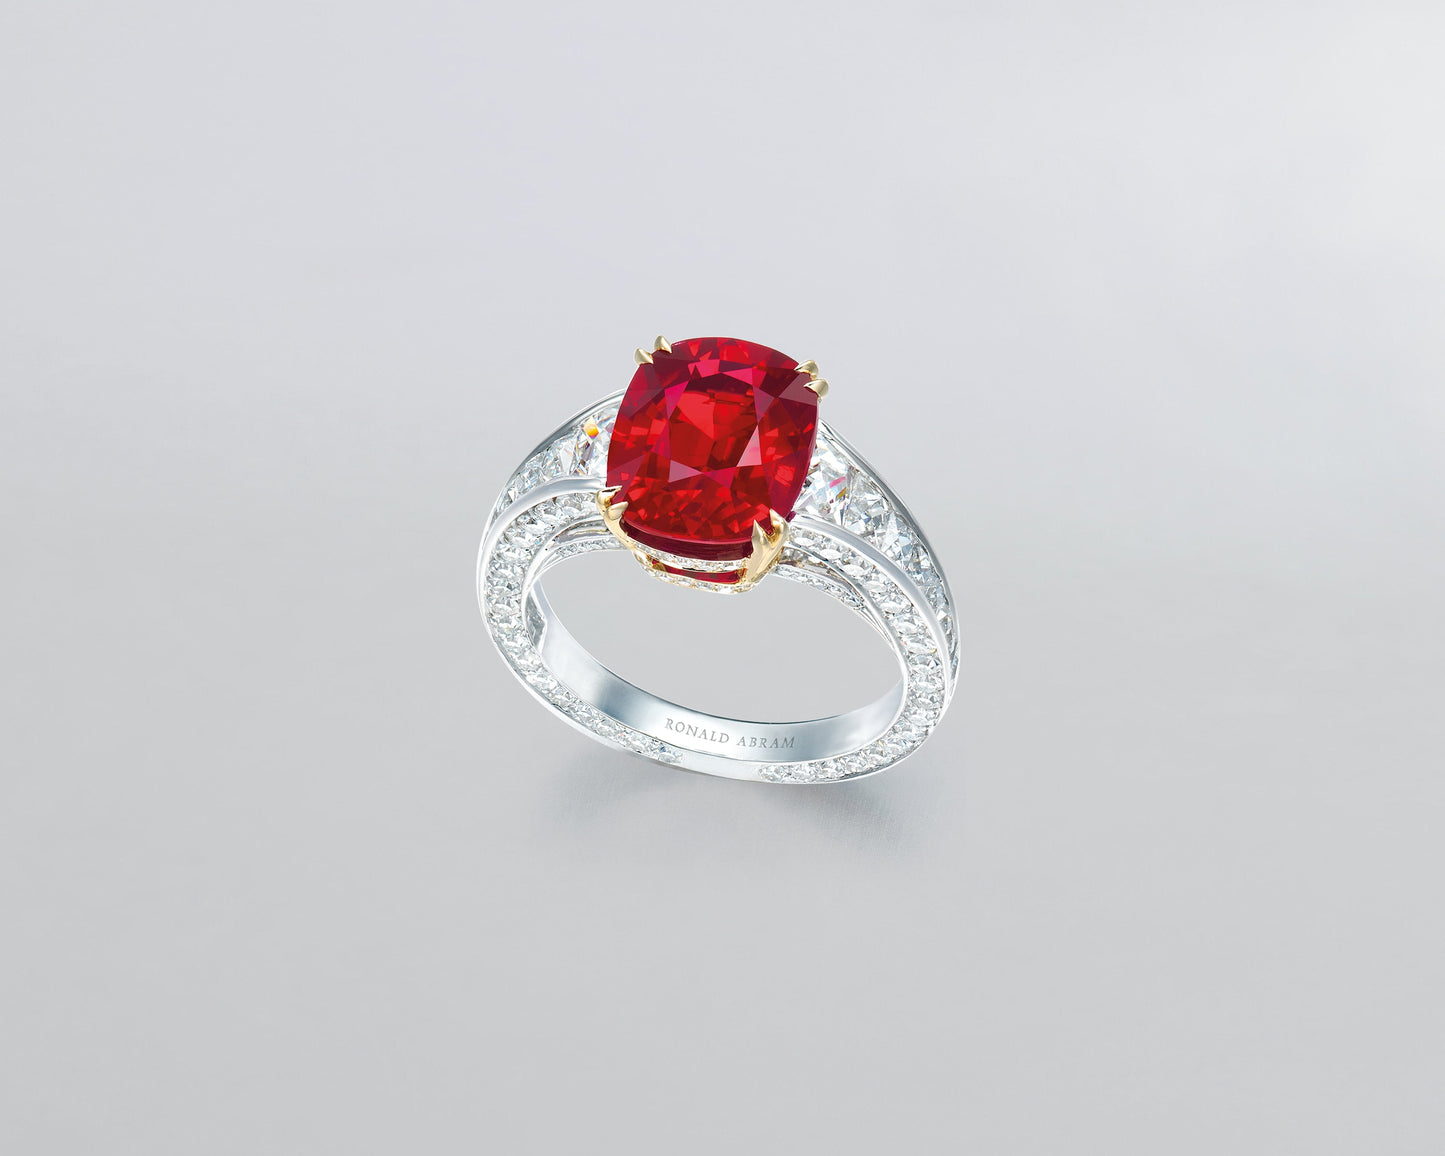 5.11 carat Cushion Cut Burmese Ruby Ring